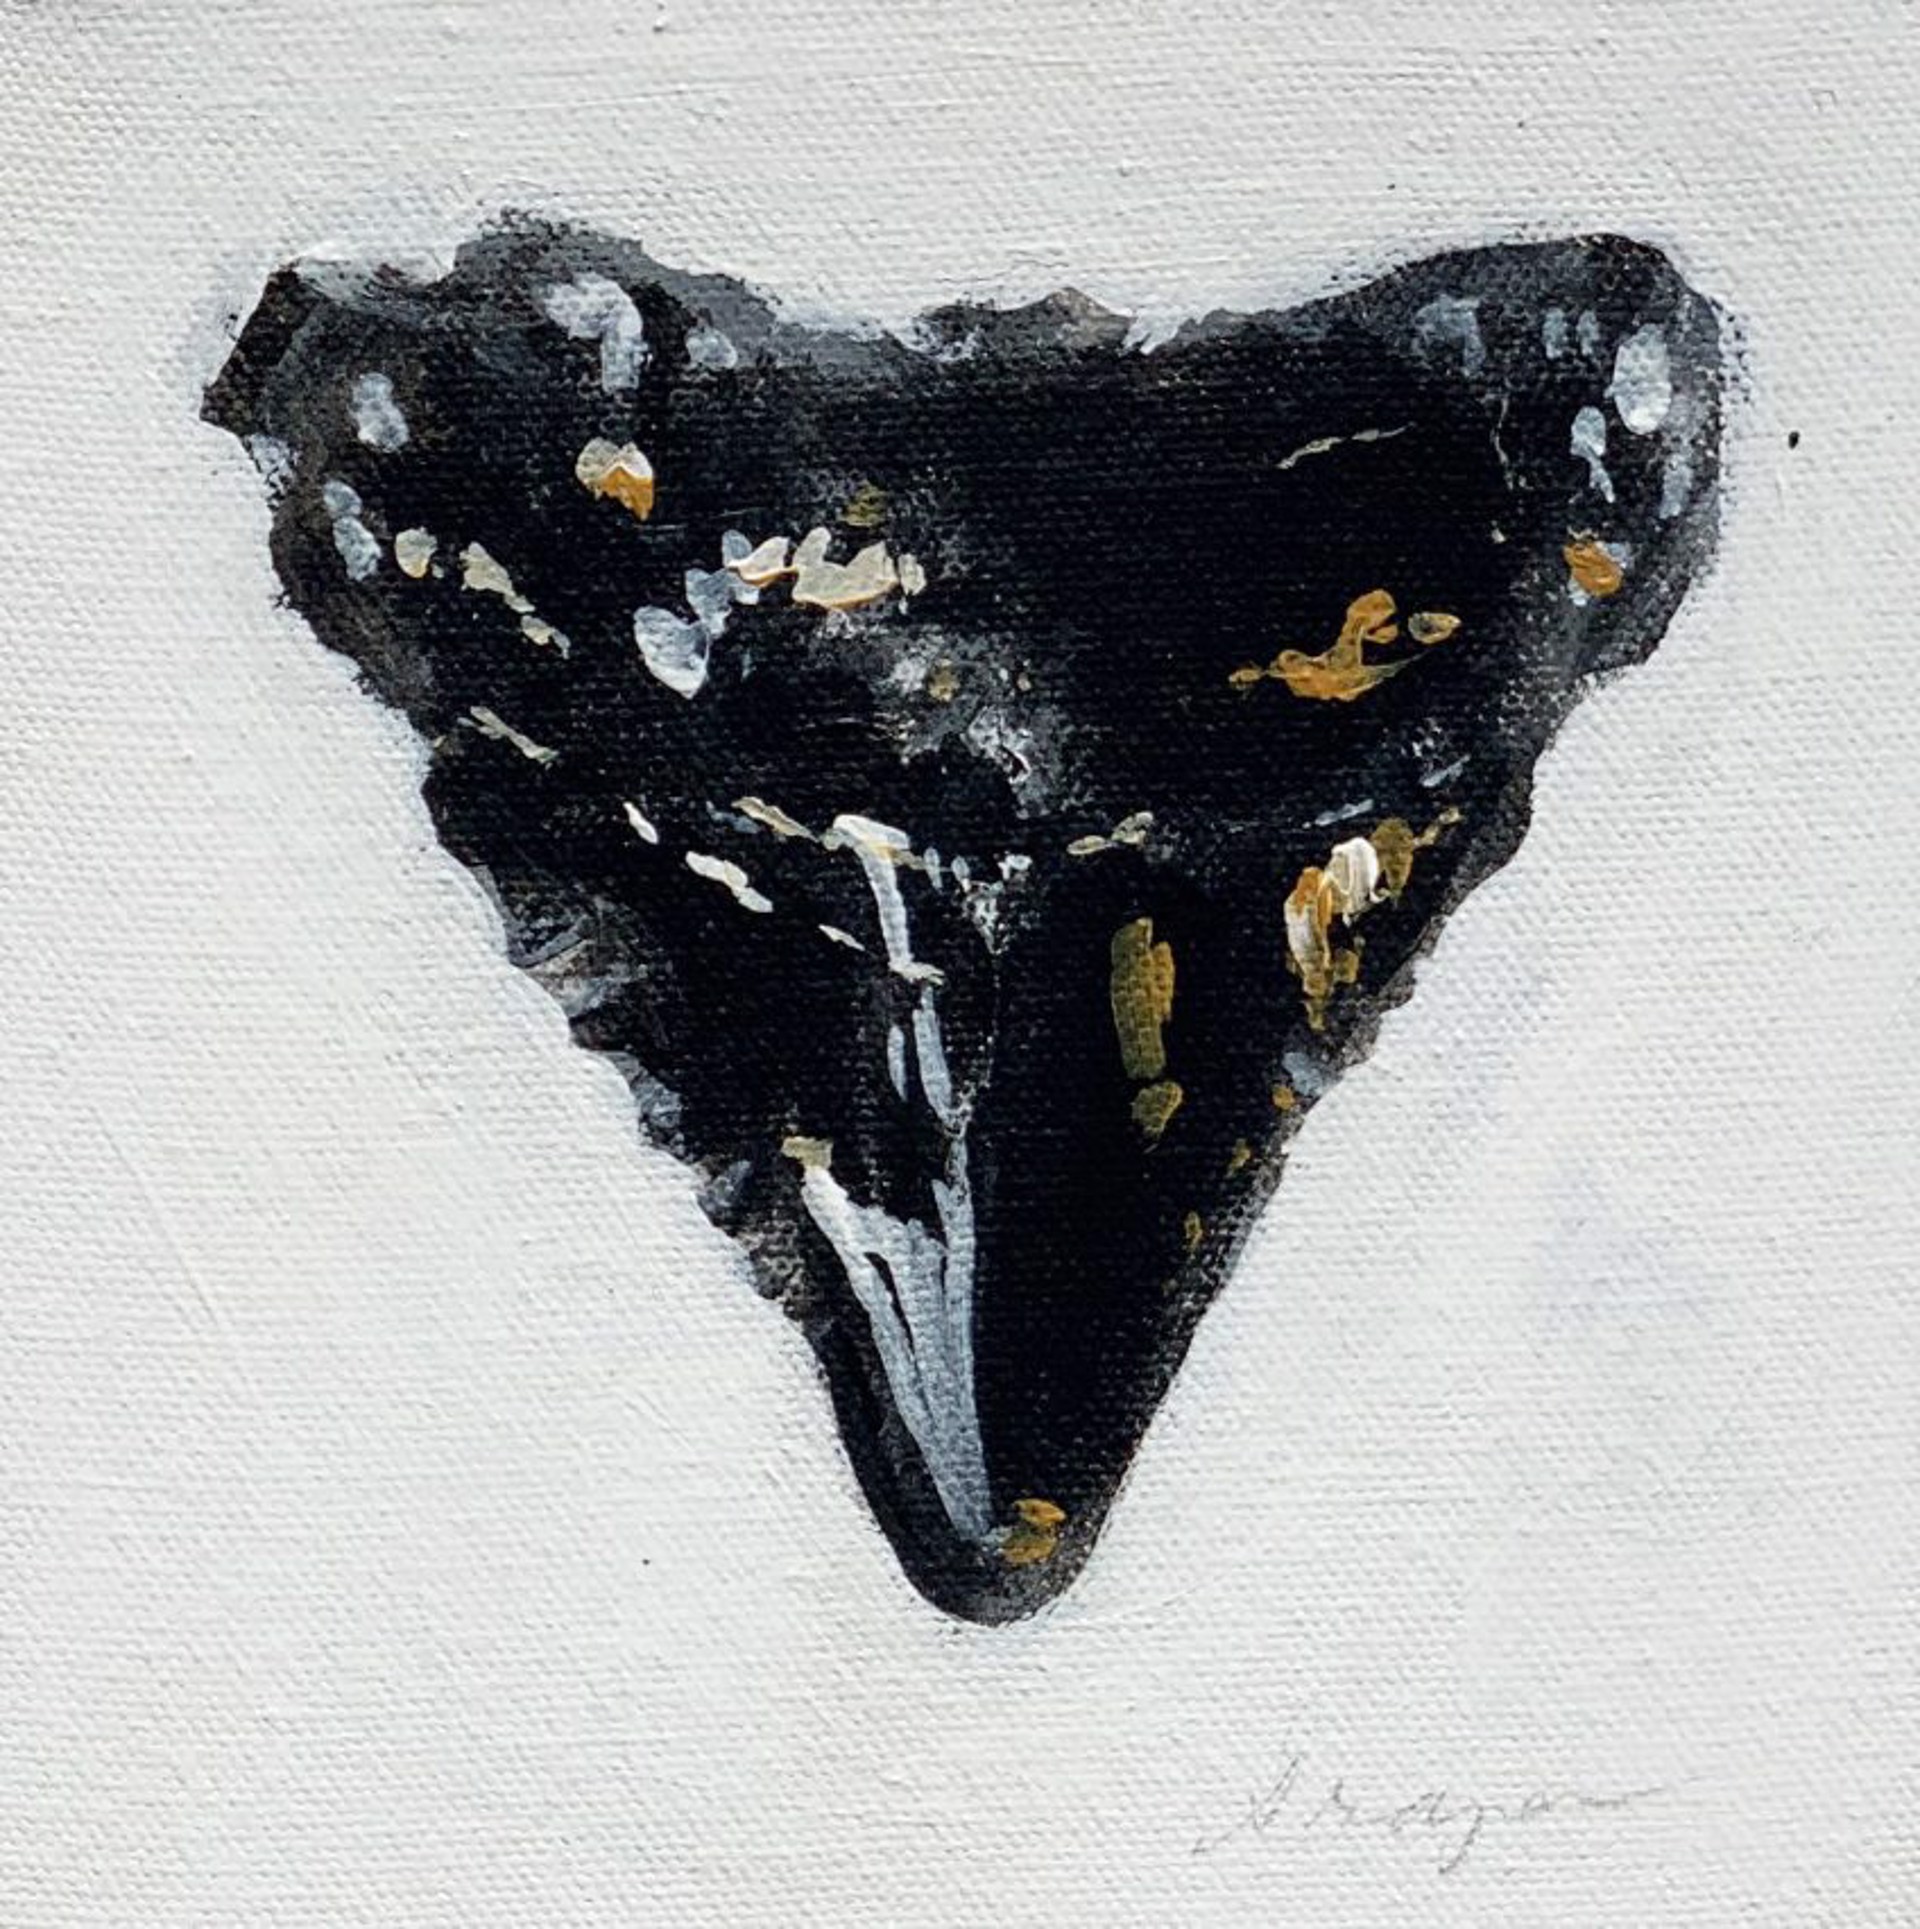 Sharksteeth-14x14 by Jim Draper